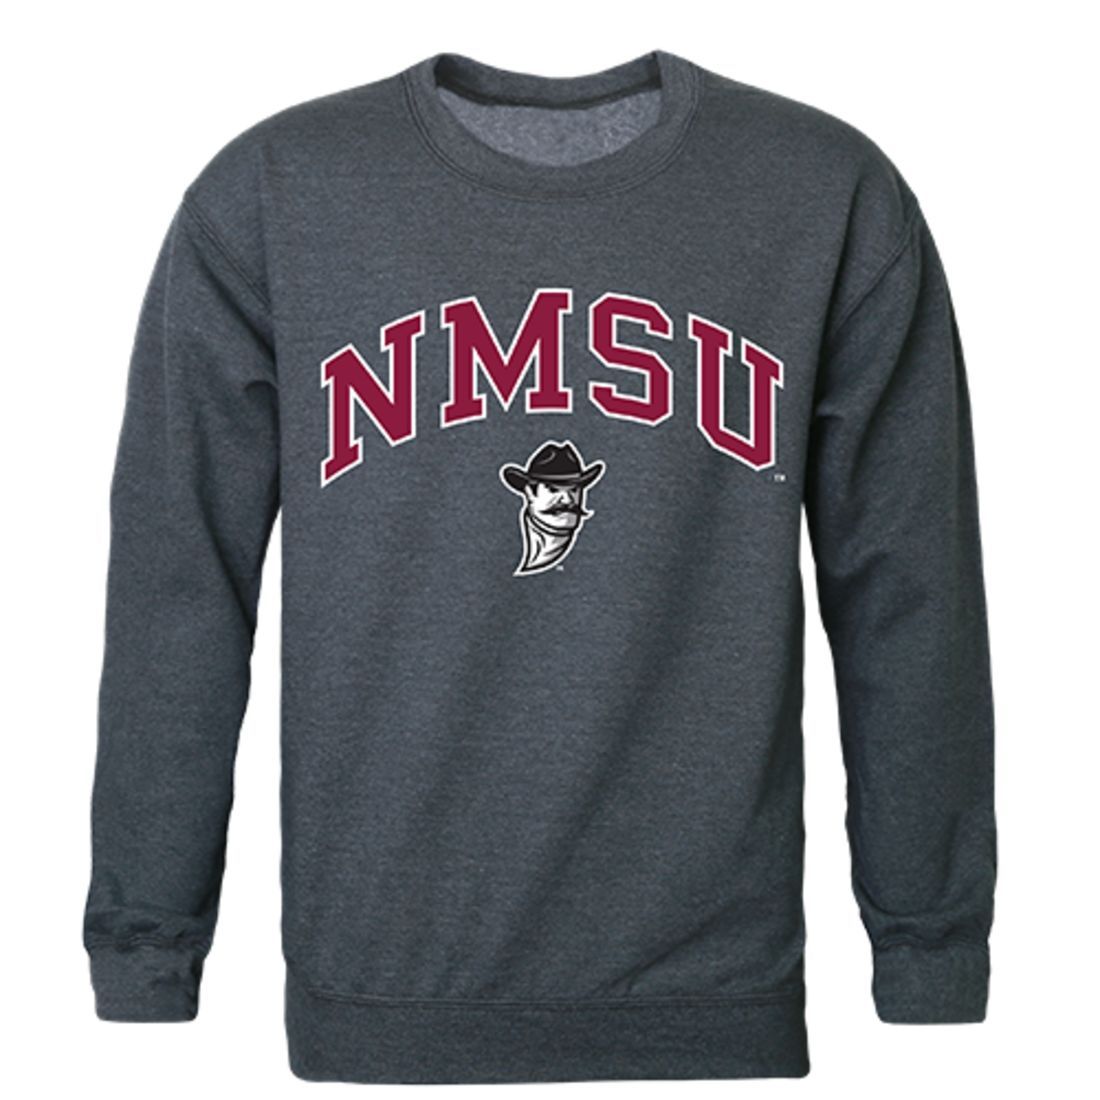 NMSU New Mexico State University Campus Crewneck Pullover Sweatshirt Sweater Heather Charcoal-Campus-Wardrobe